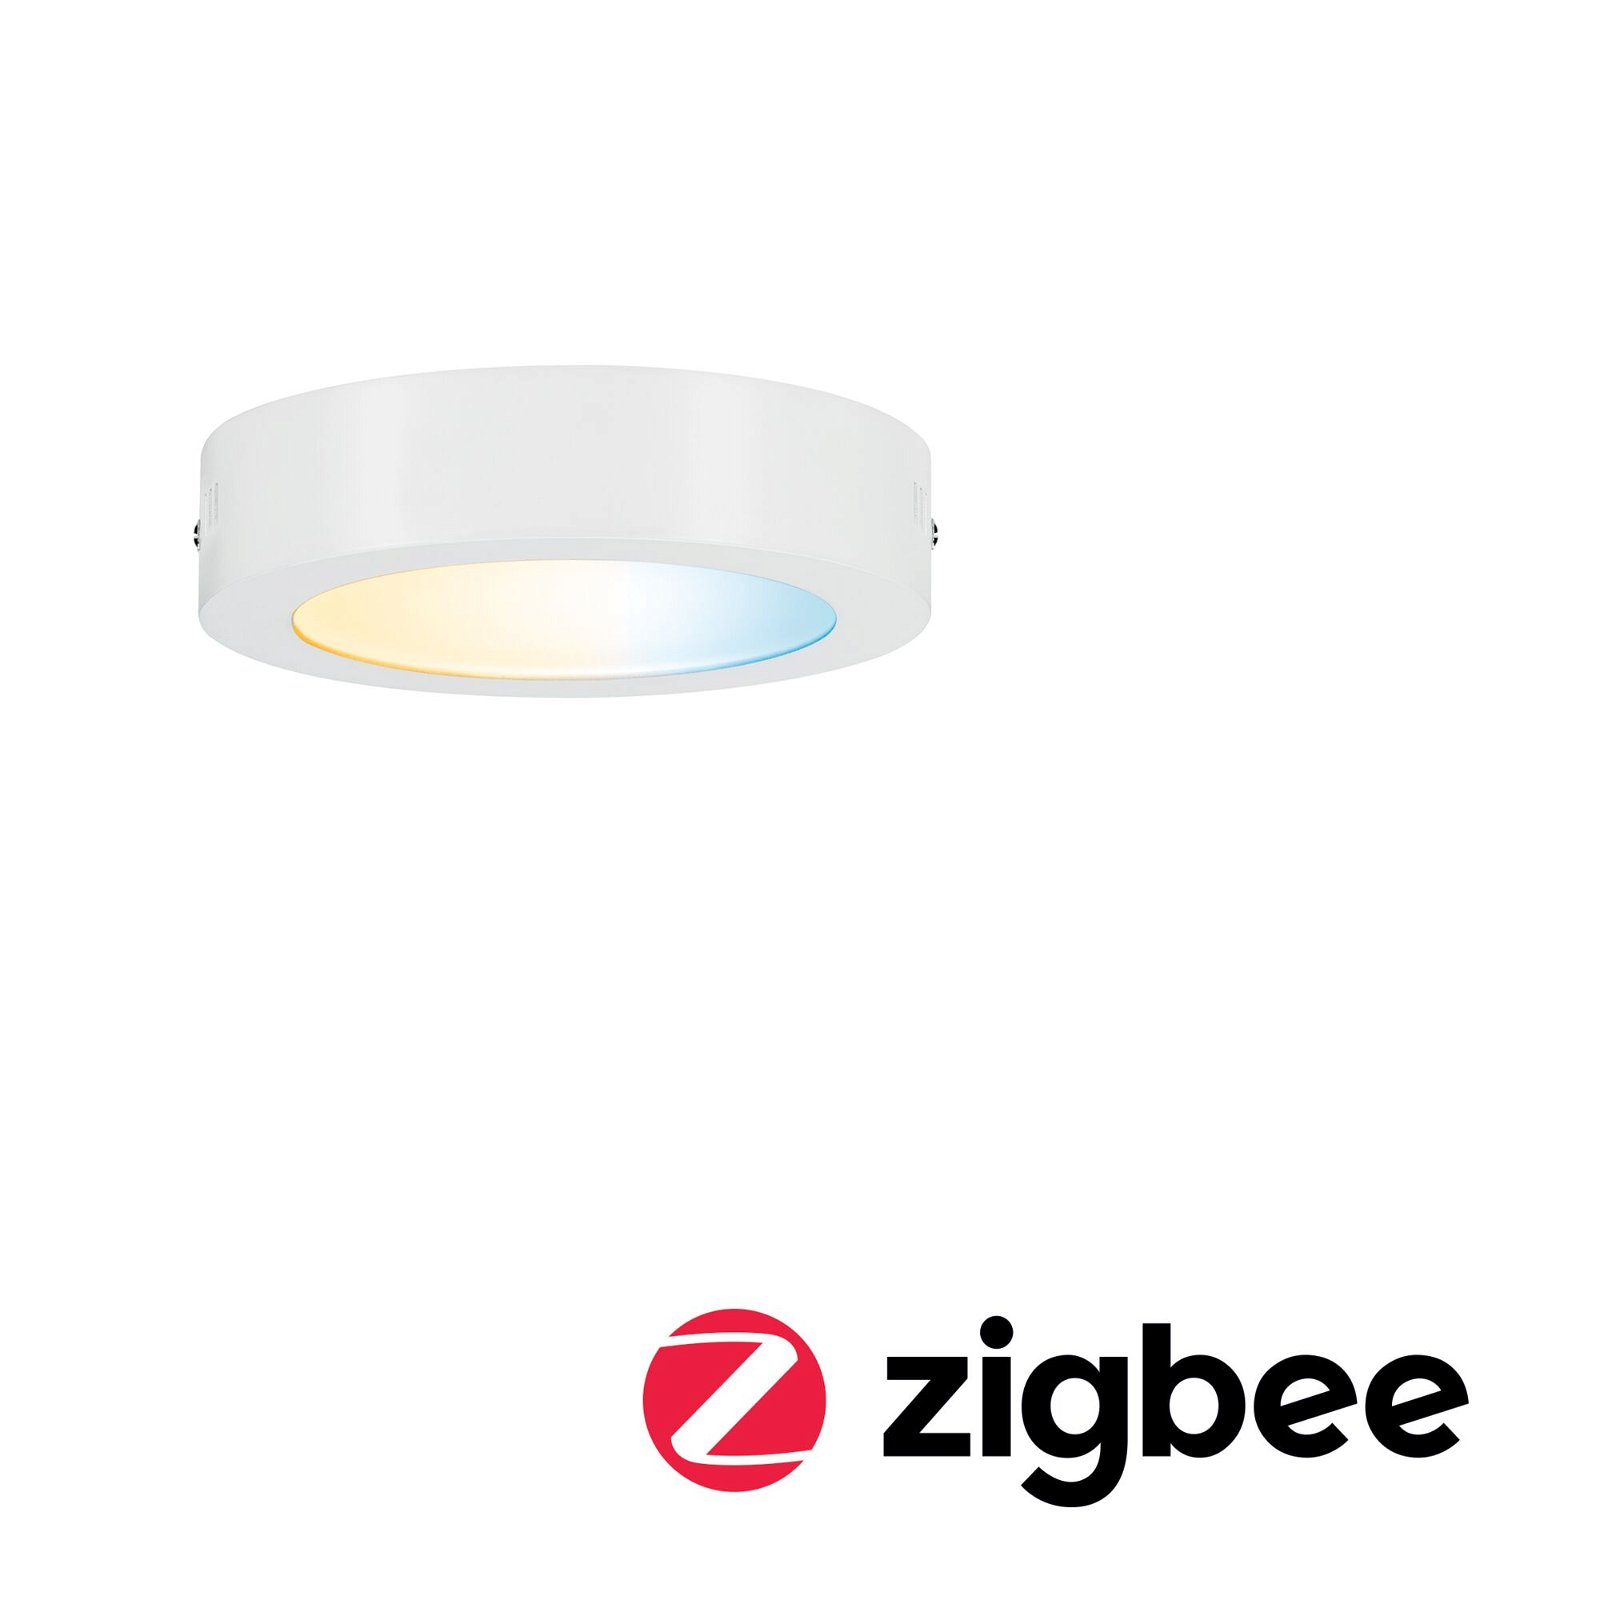 LED Panel Smart Home Zigbee 3.0 Cesena rund 170mm 9W 600lm Tunable White Weiß matt dimmbar